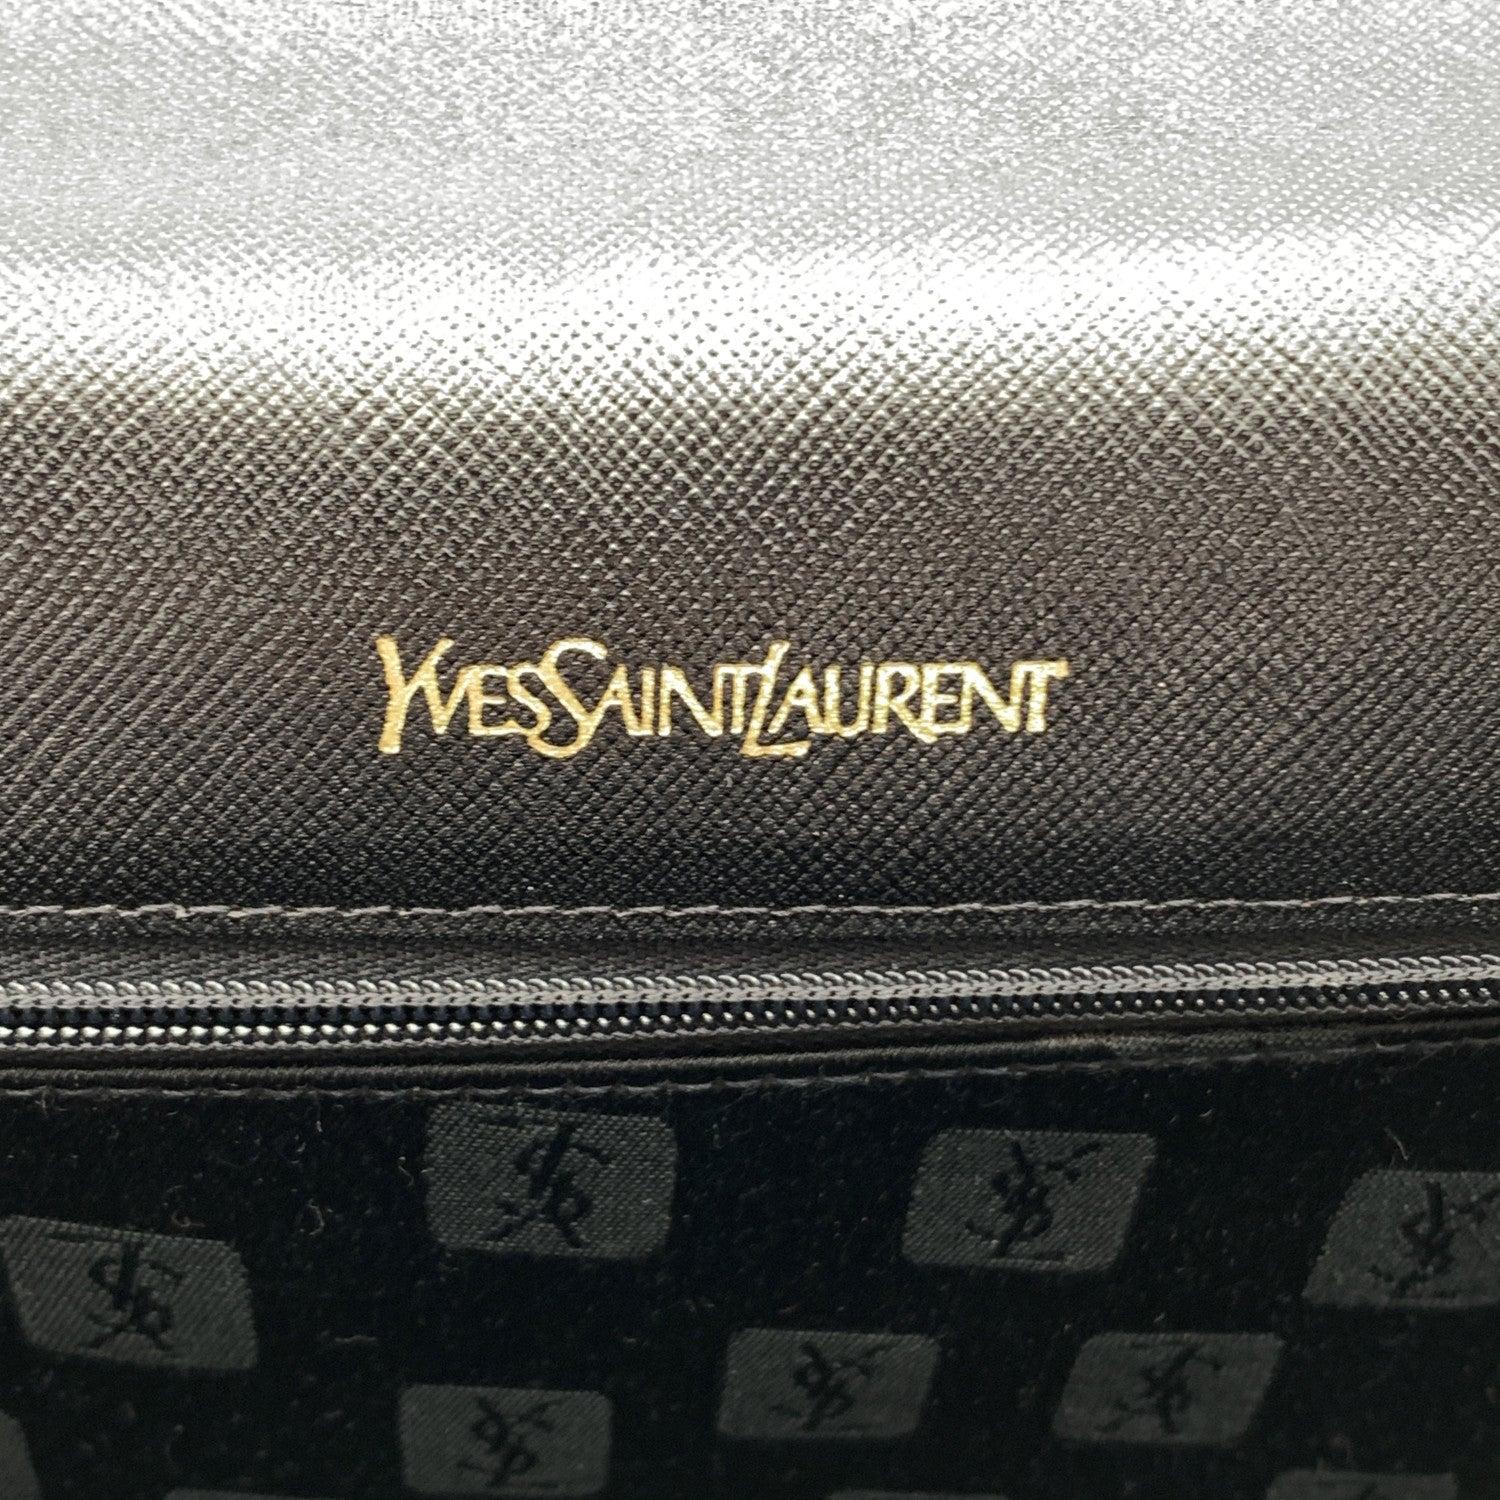 Yves Saint Laurent - Pochette vintage en cuir noir avec logo YSL 1